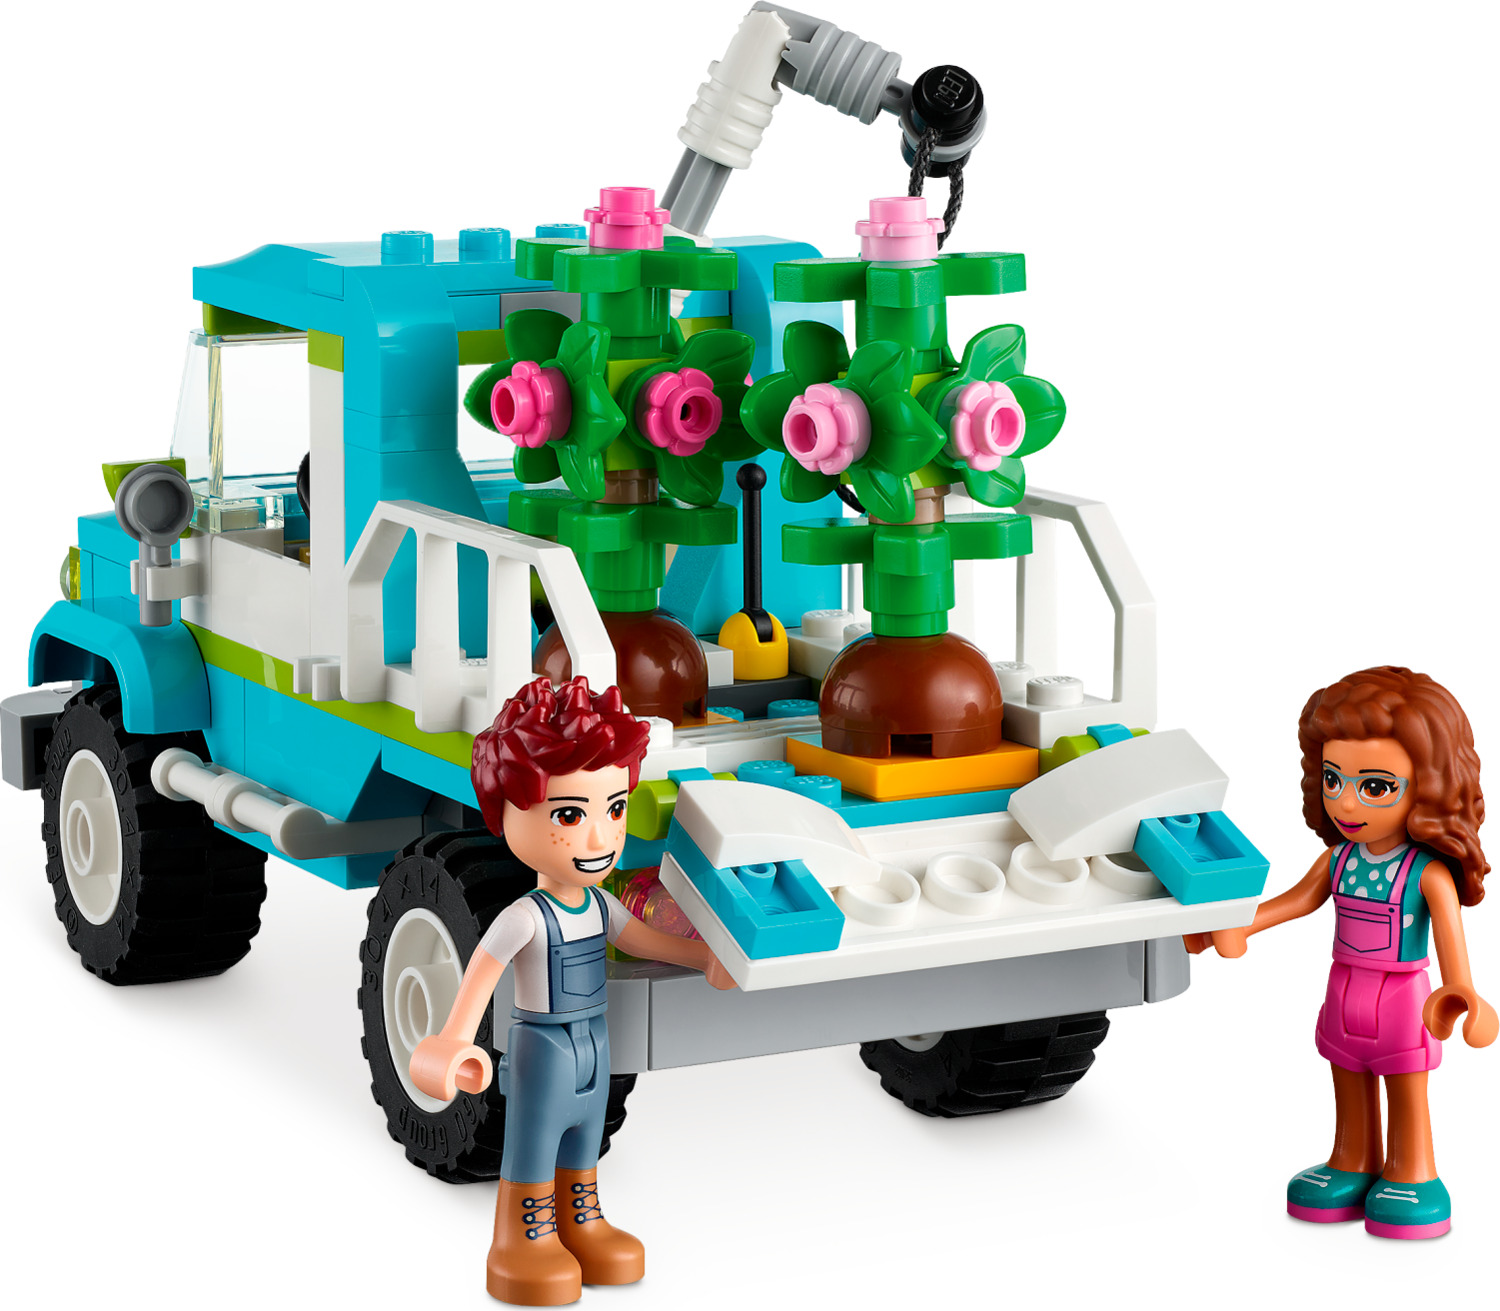 LEGO Friends: Tree-Planting Vehicle